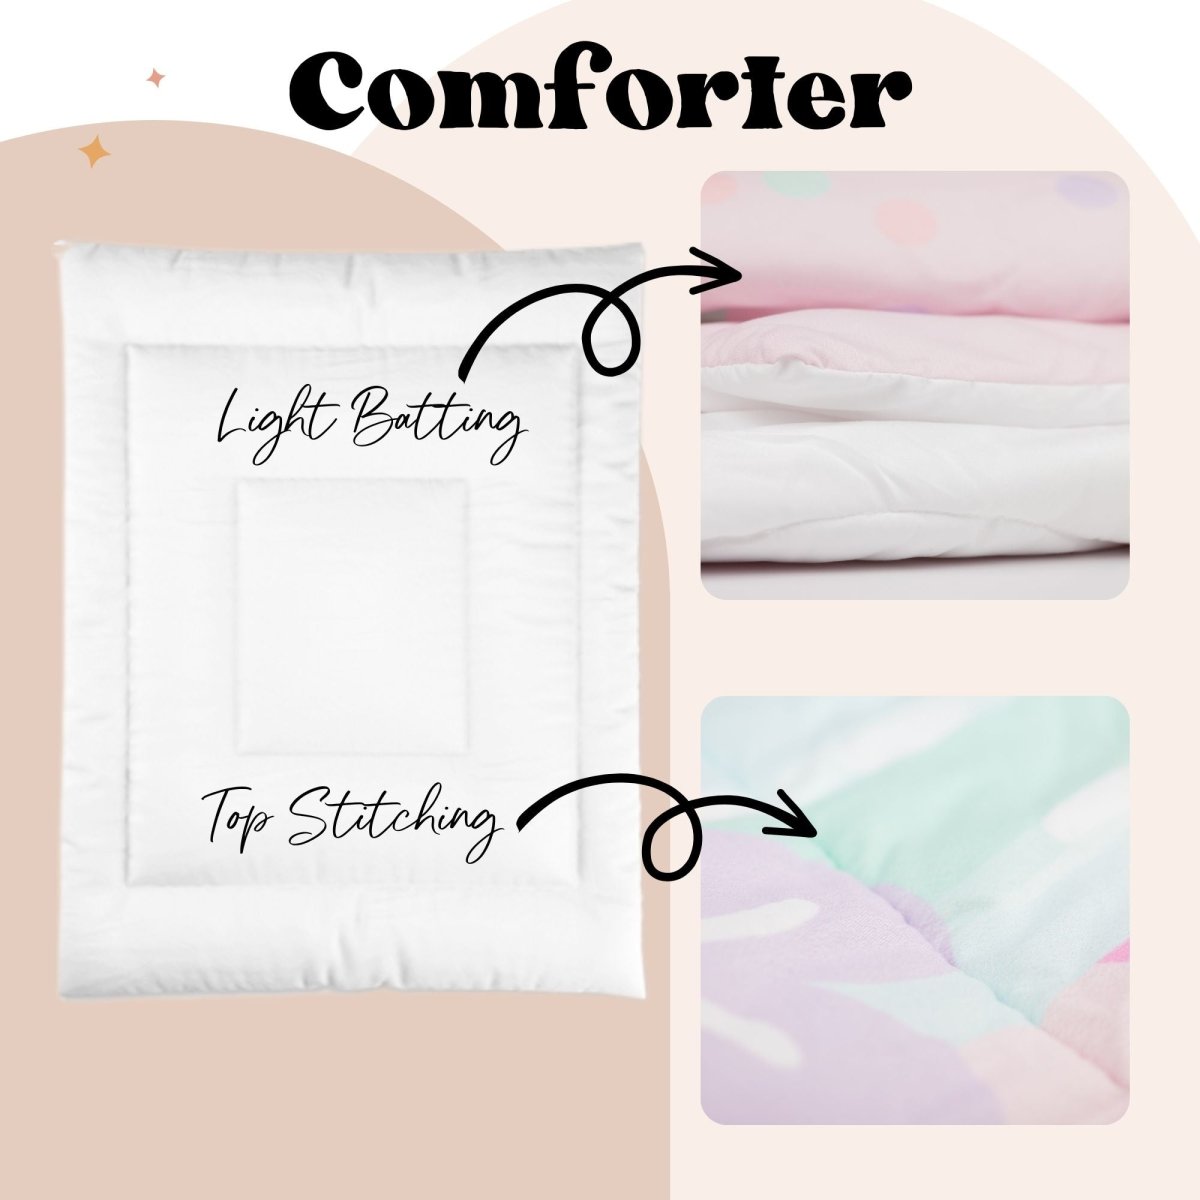 Buffalo Babe Personalized Kids Bedding Set (Comforter or Duvet Cover) - Buffalo Babe, gender_boy, text